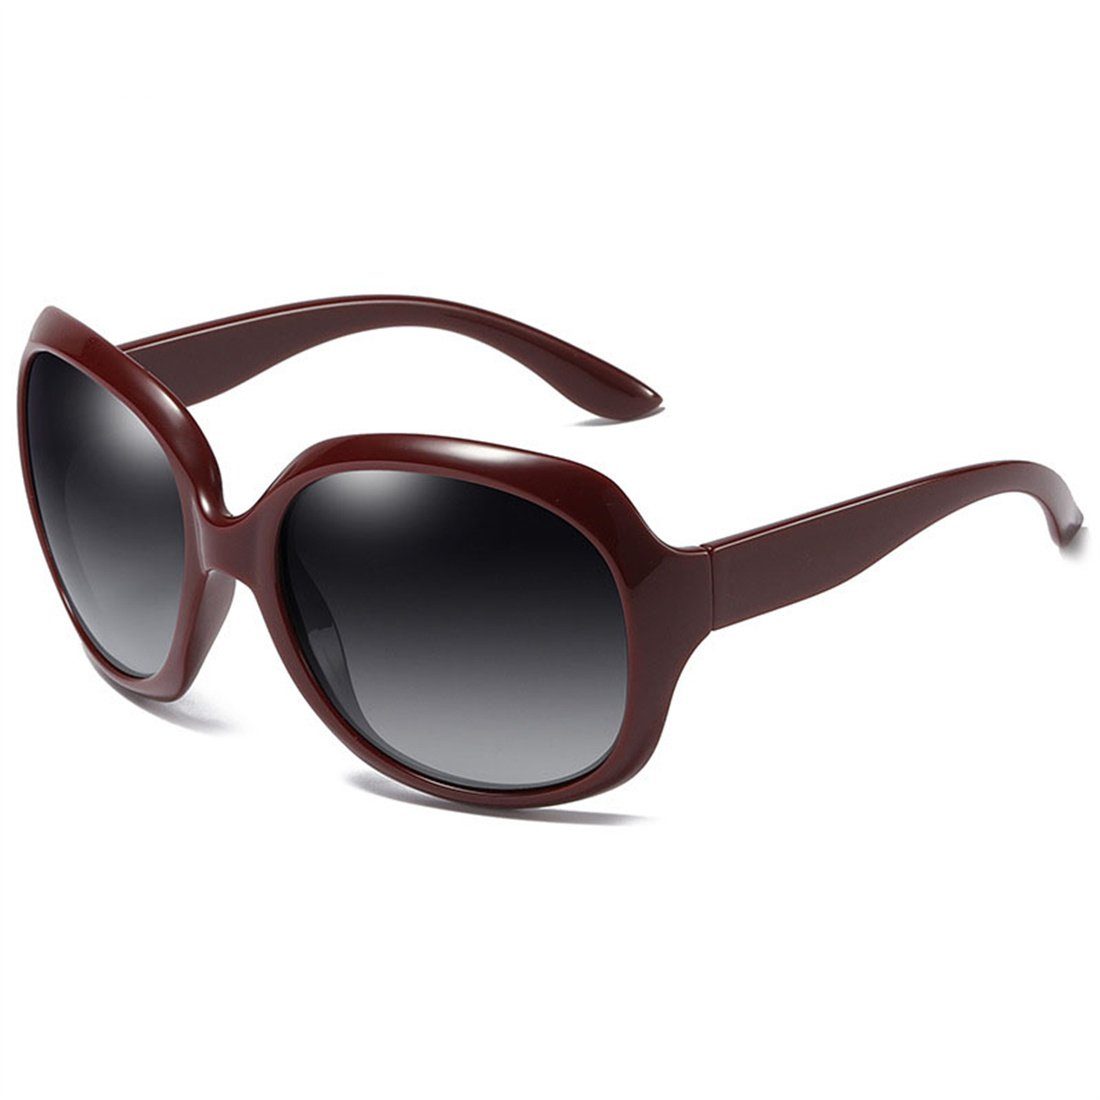 DÖRÖY Sonnenbrille Damenmode Polarisierte Sonnenbrille, Outdoor Vollrahmen-Sonnenbrille